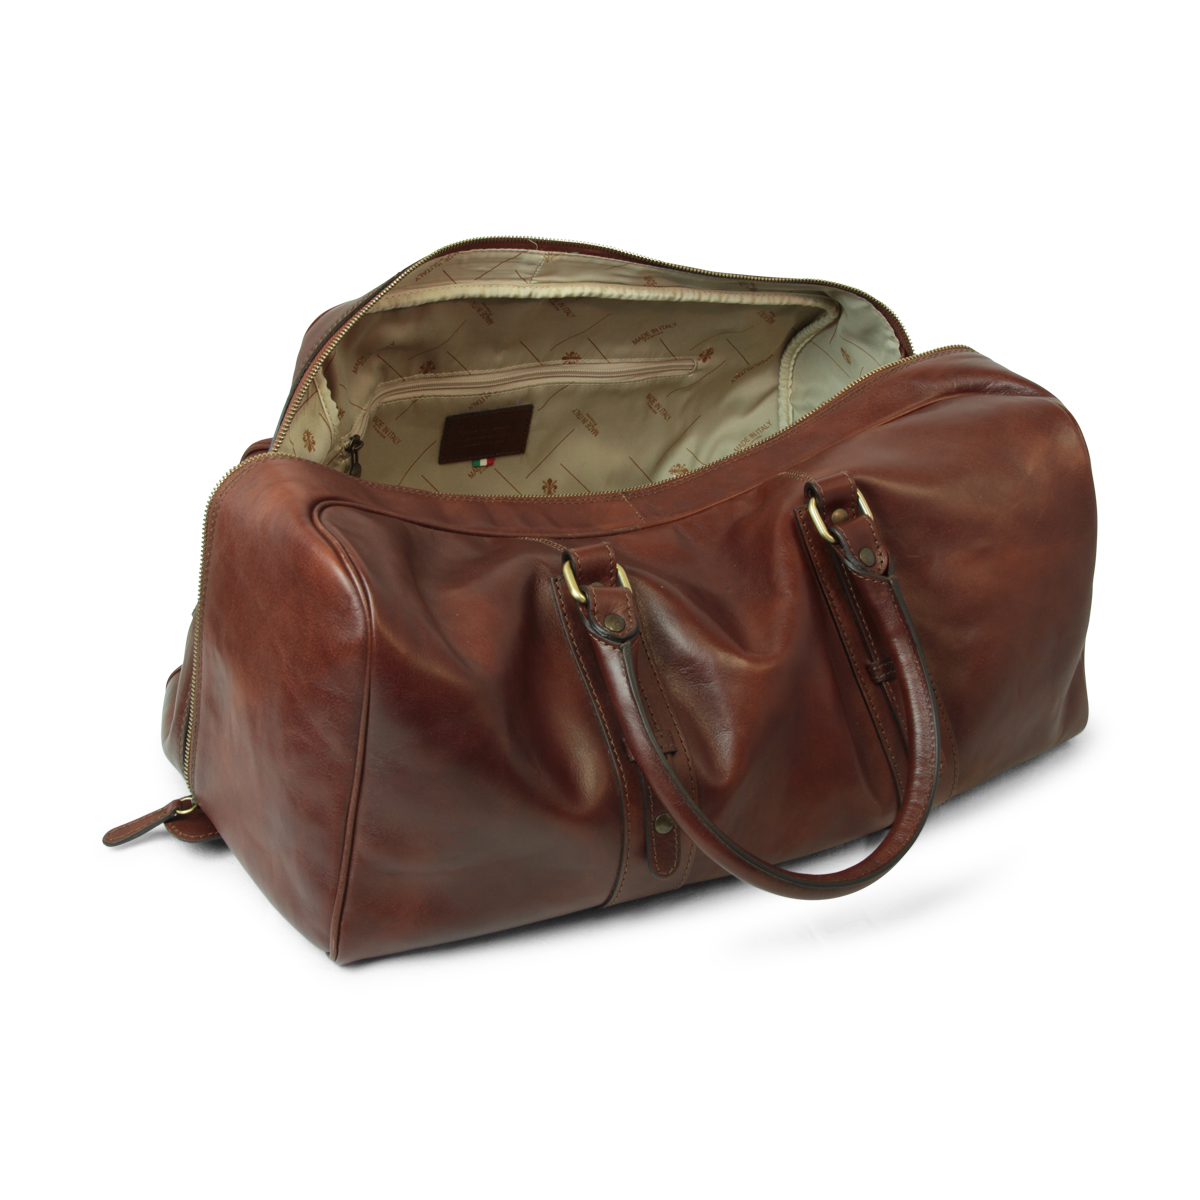 Full grain Leather travel bag - brown|408489MA|Old Angler Firenze